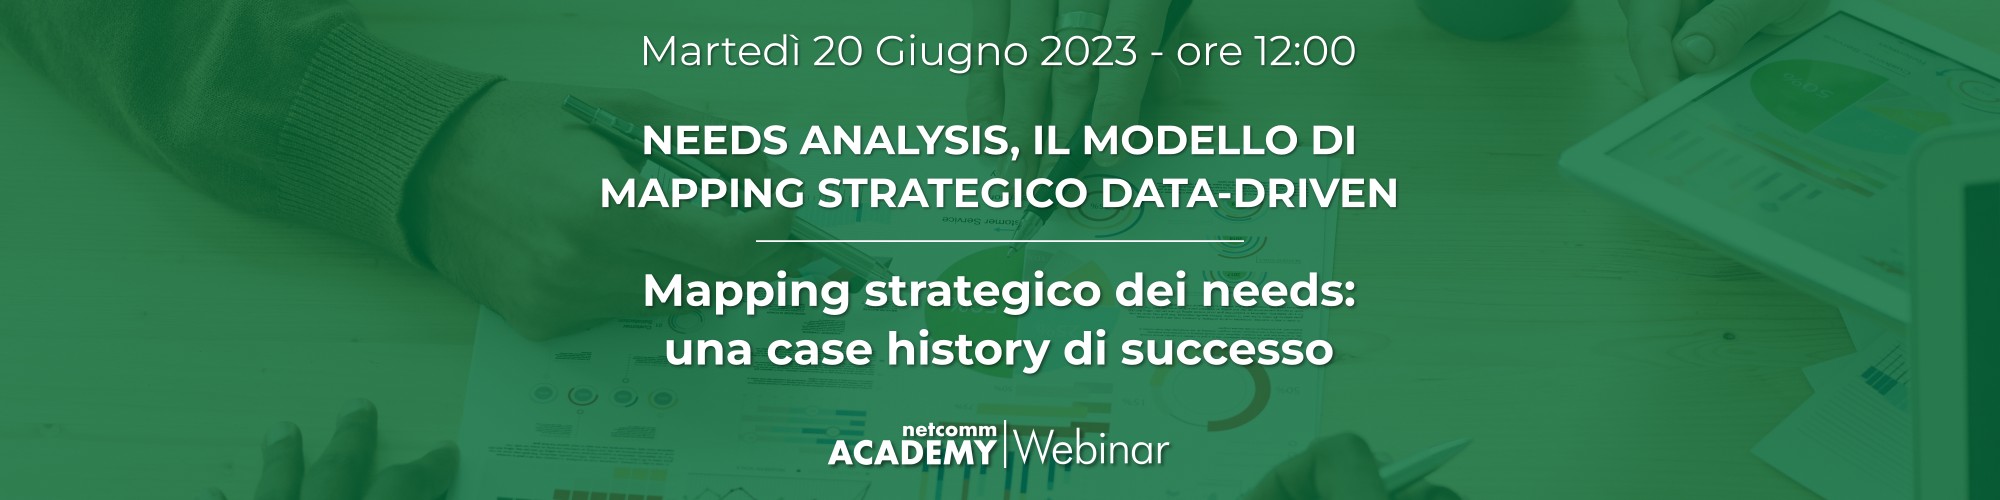 needs-analysis-modello-mapping-strategico_webinar-netcomm-academy_2